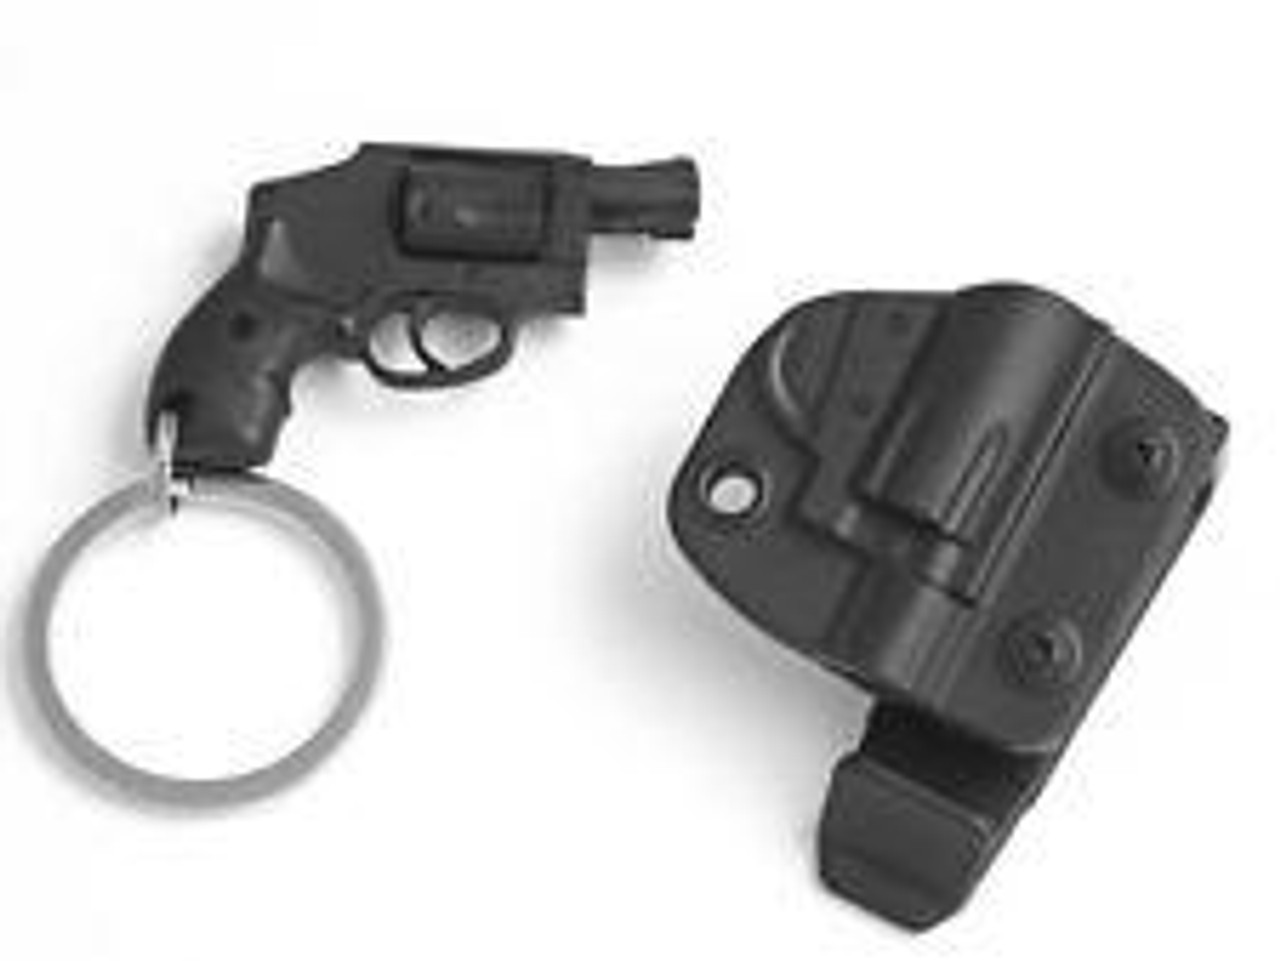 Blade-Tech Mini Firearm Key Chain with Holster